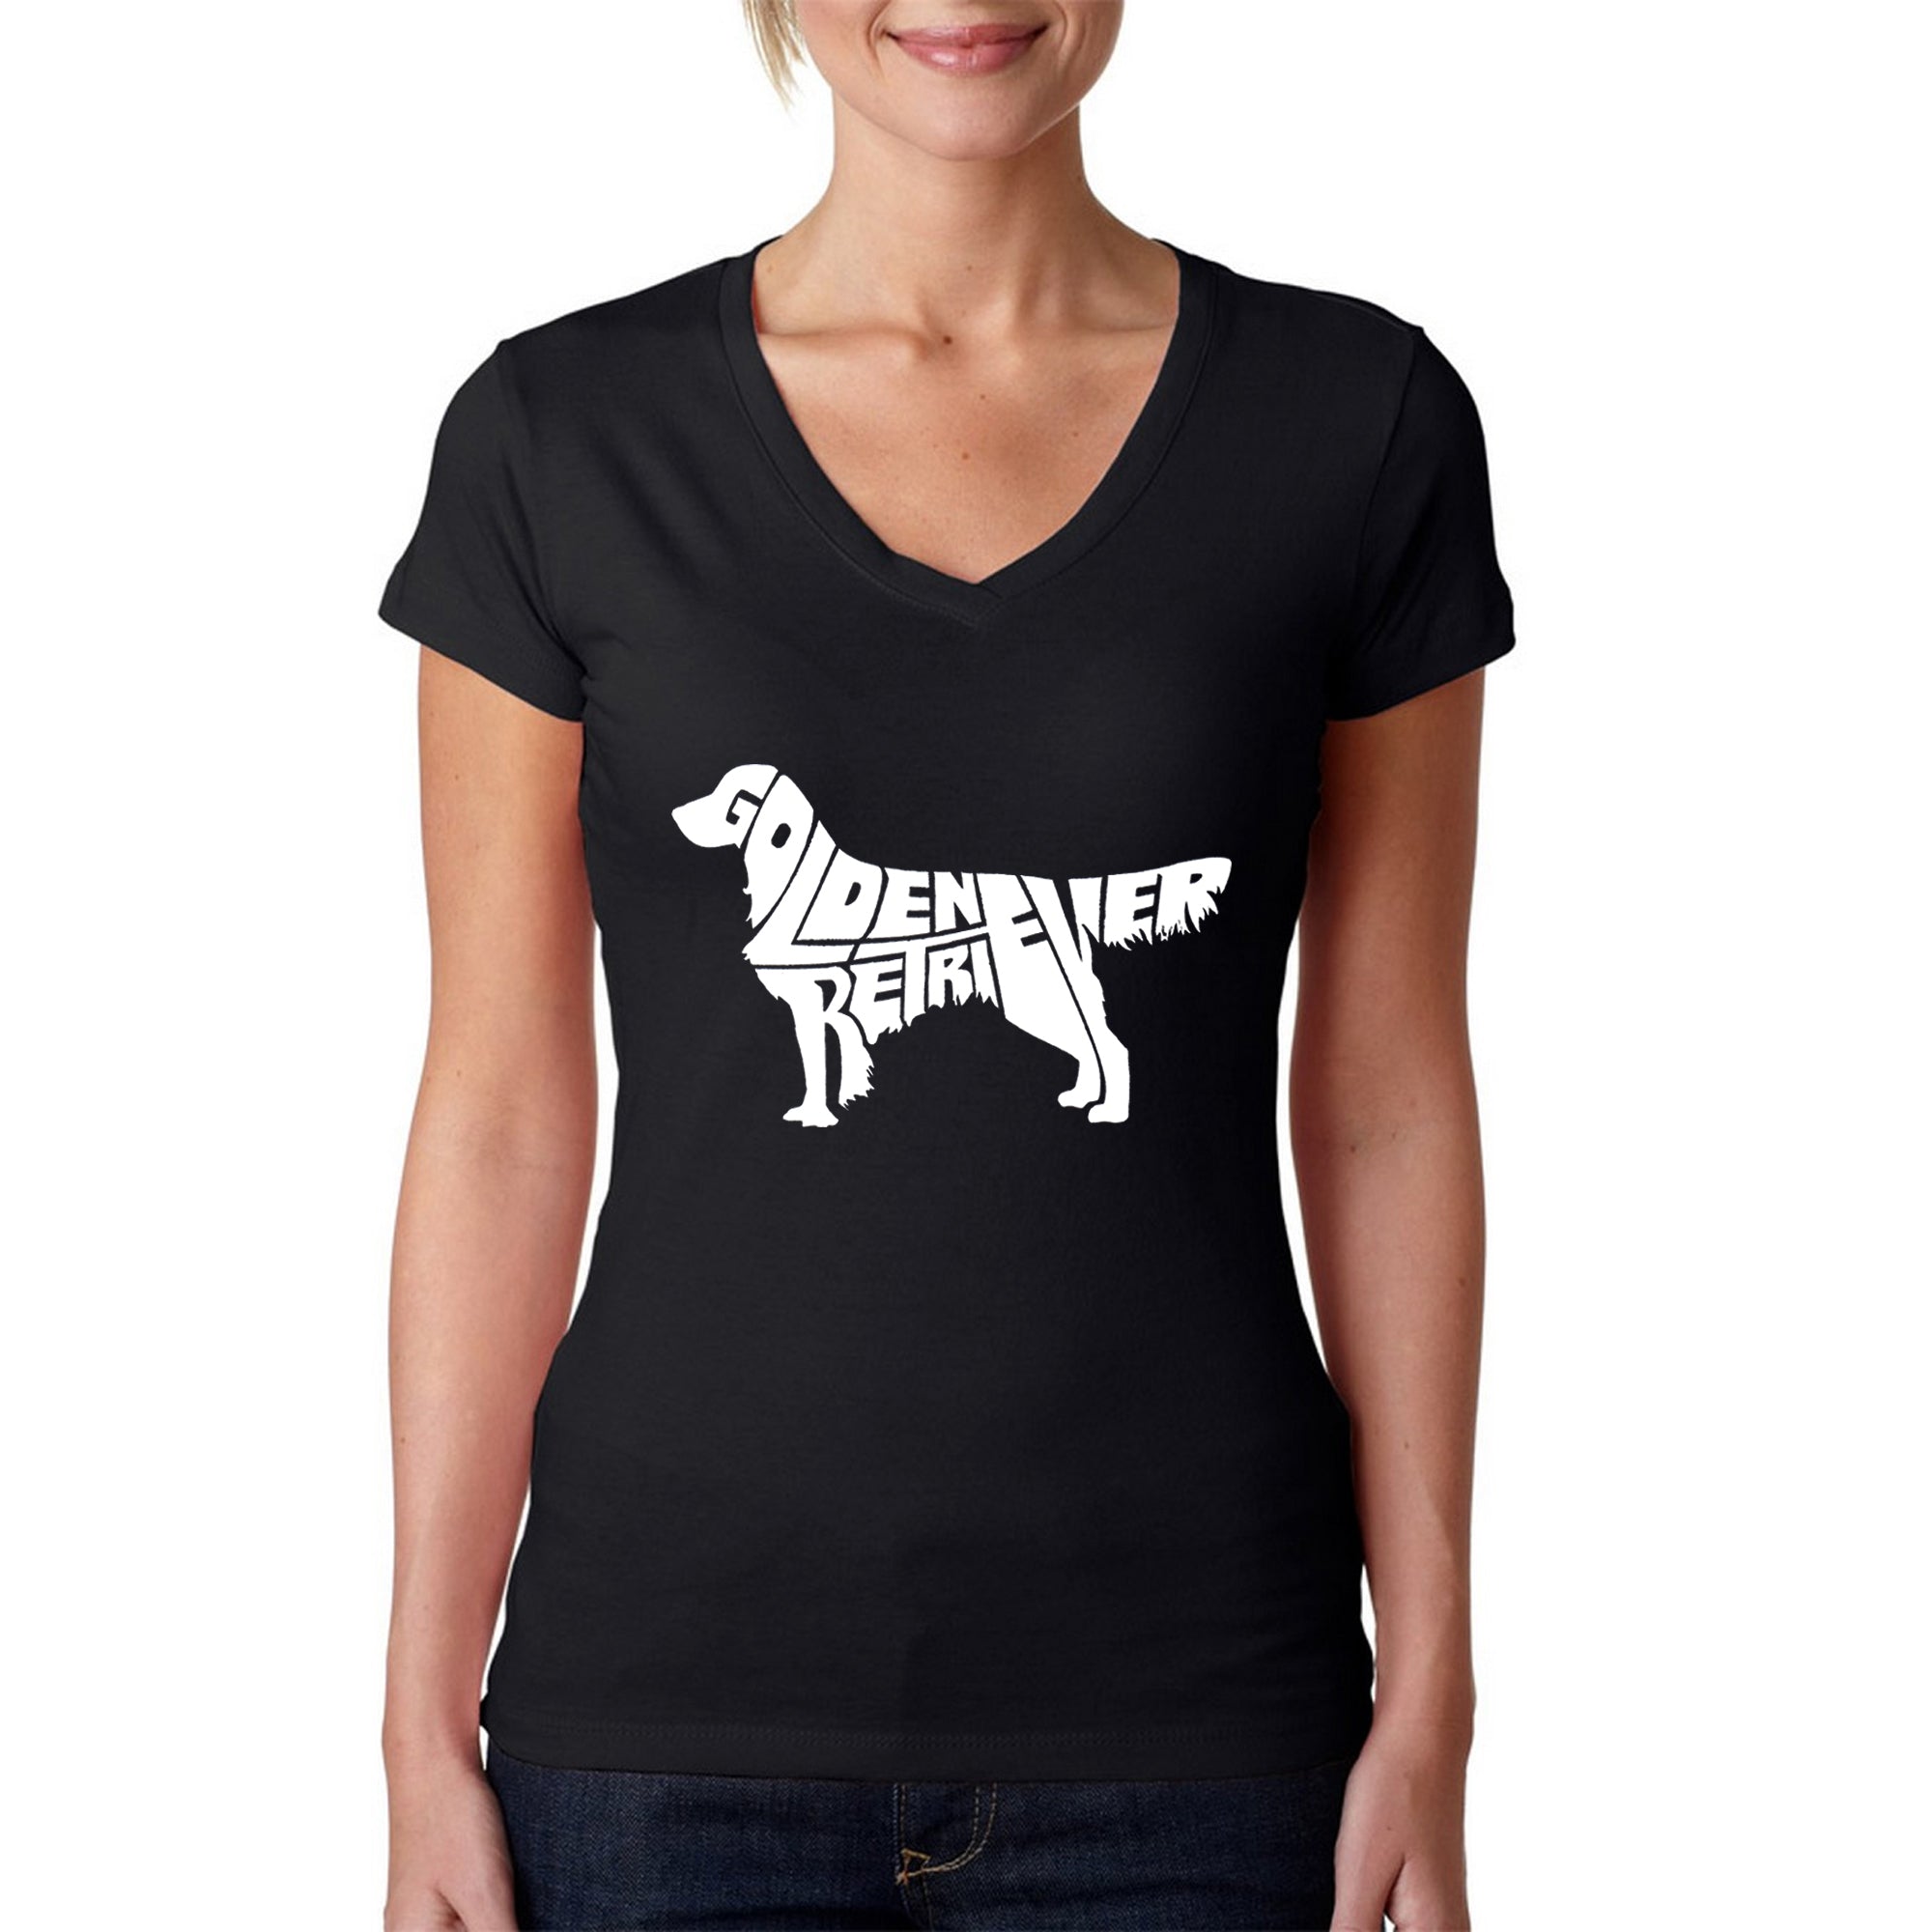 Golden Retriever - Women's Word Art V-Neck T-Shirt - Small